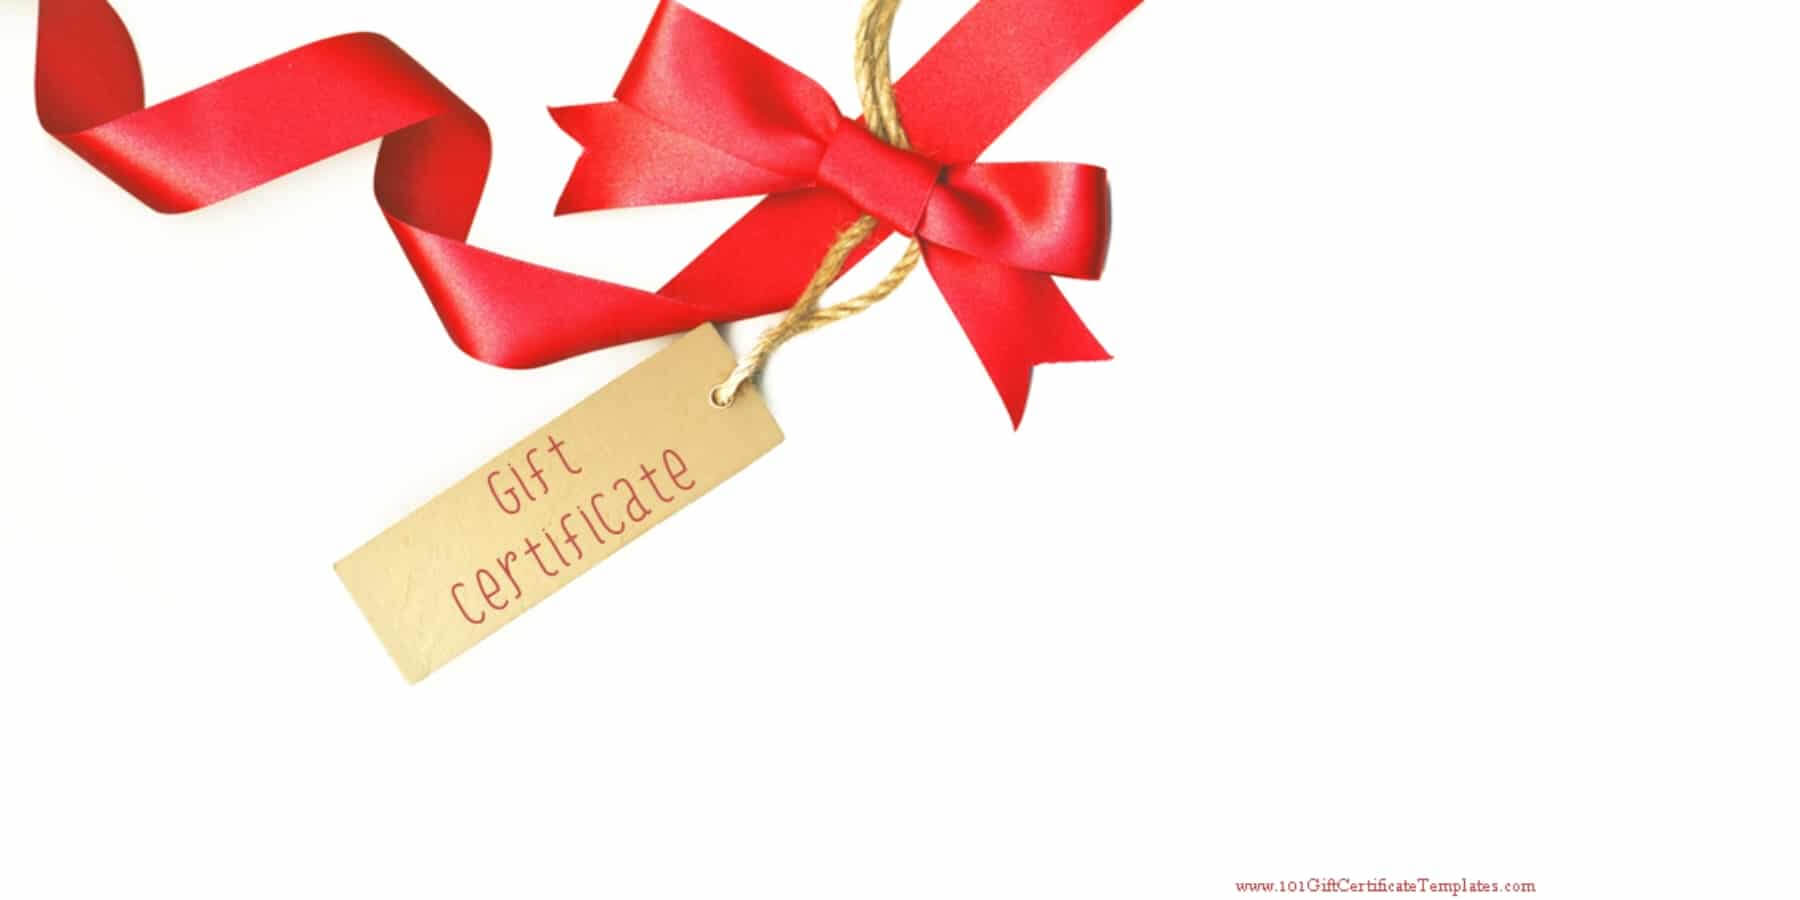 Printable Gift Certificate Templates Regarding Dinner Certificate Template Free